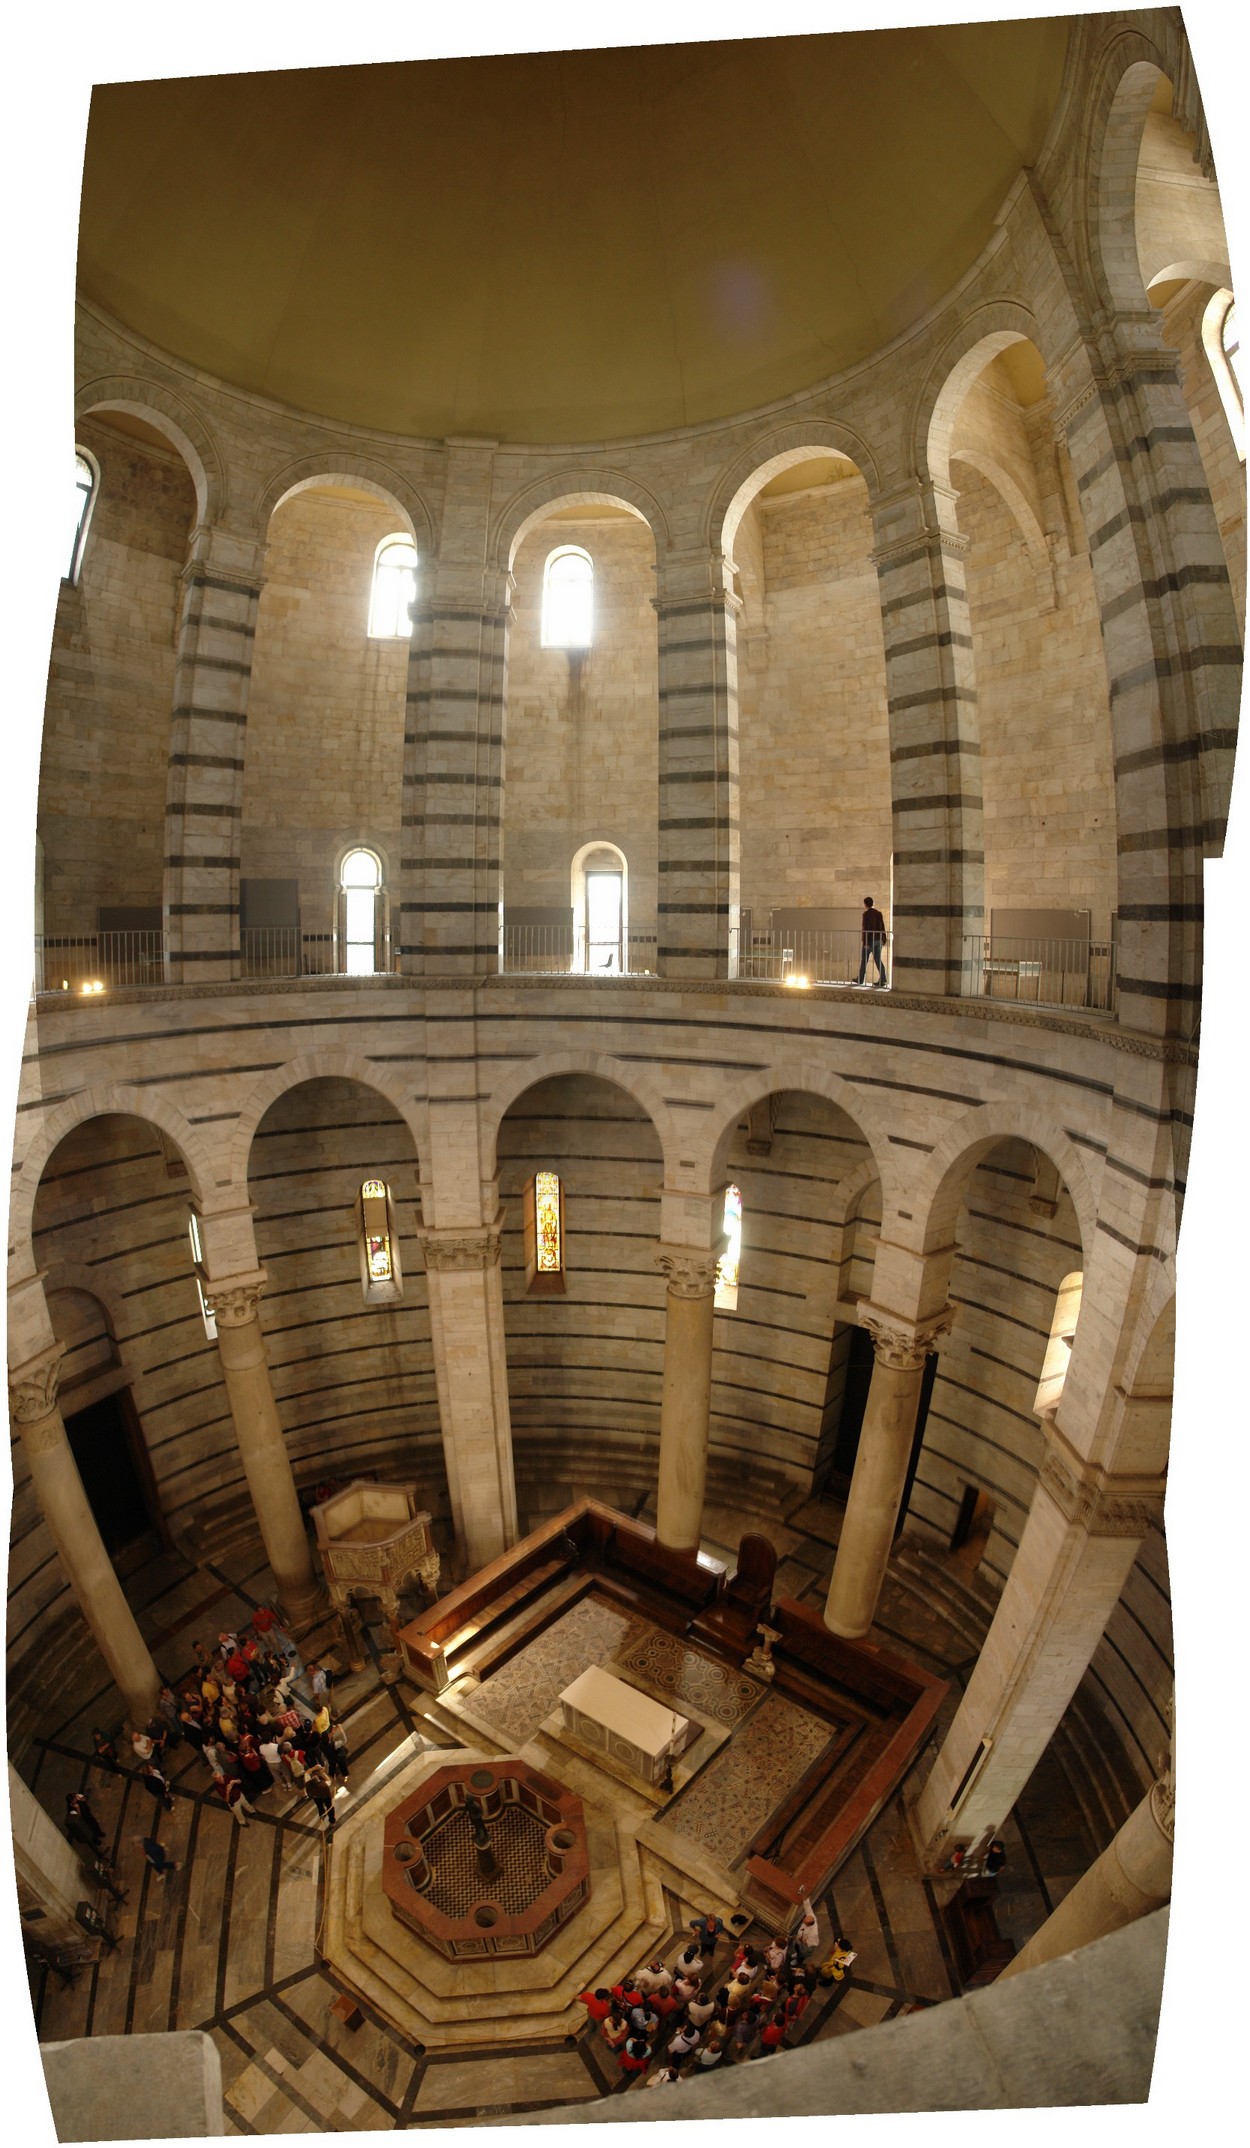 Pisa - Taufkapelle